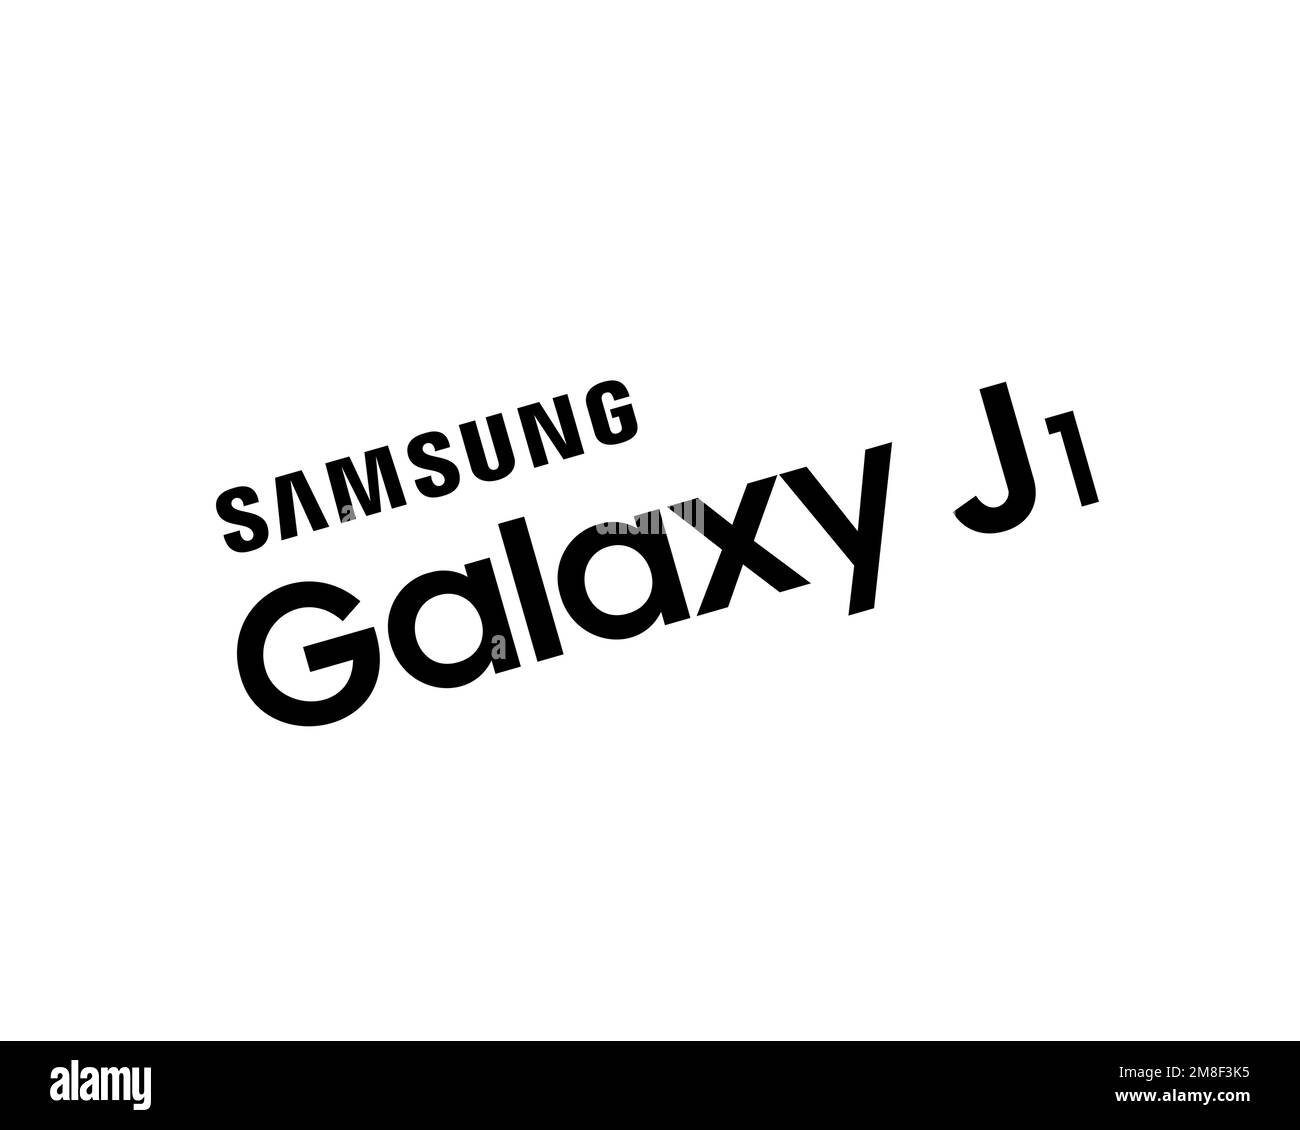 Samsung Galaxy J1, rotated logo, white background Stock Photo